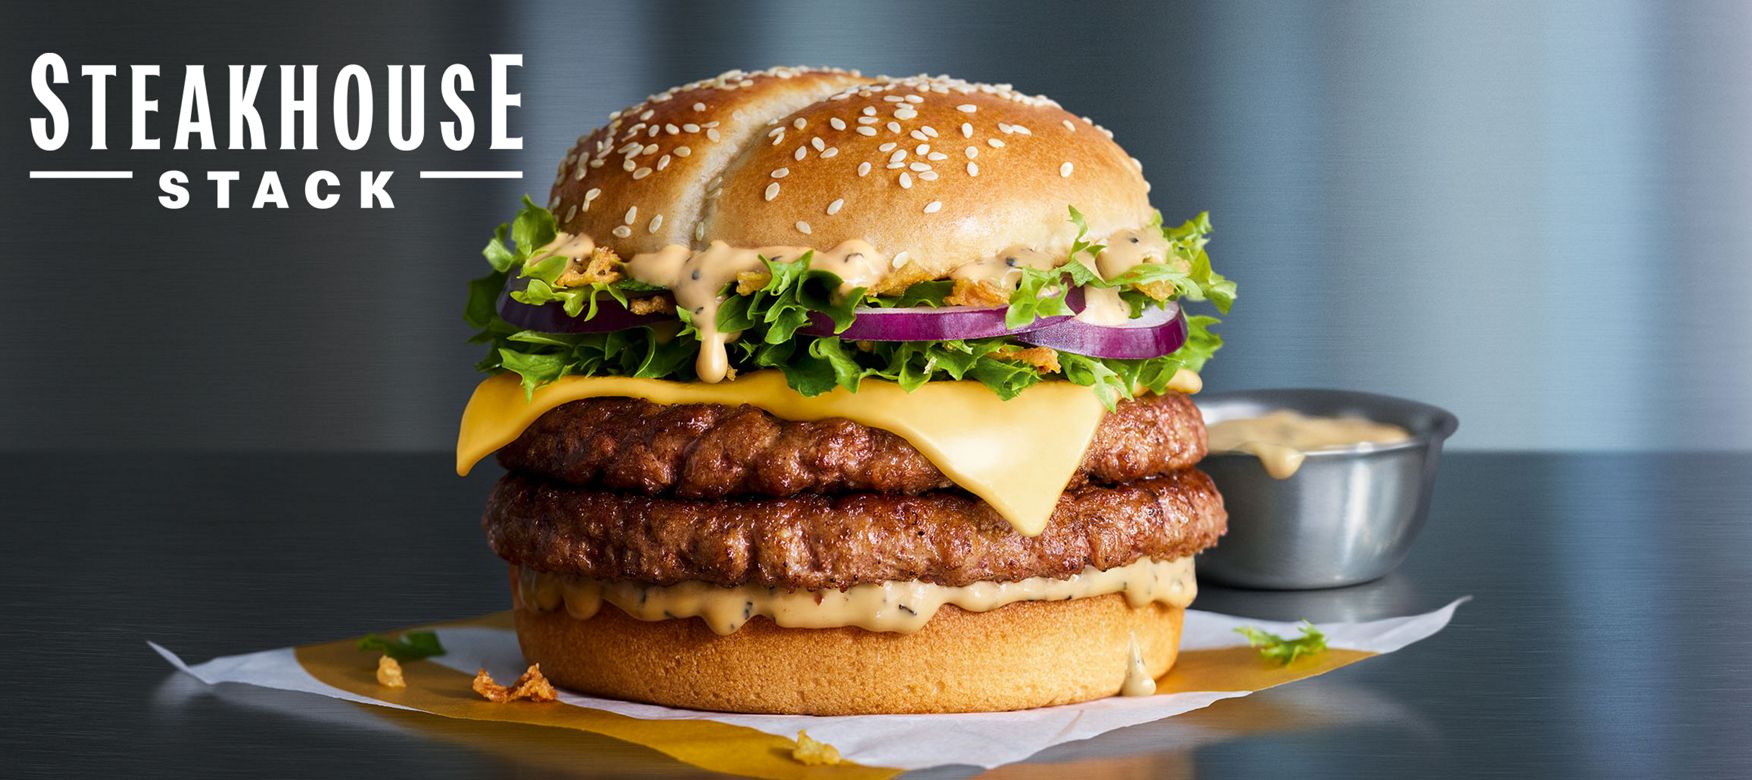 Steakhouse Stack burger on a blue background.